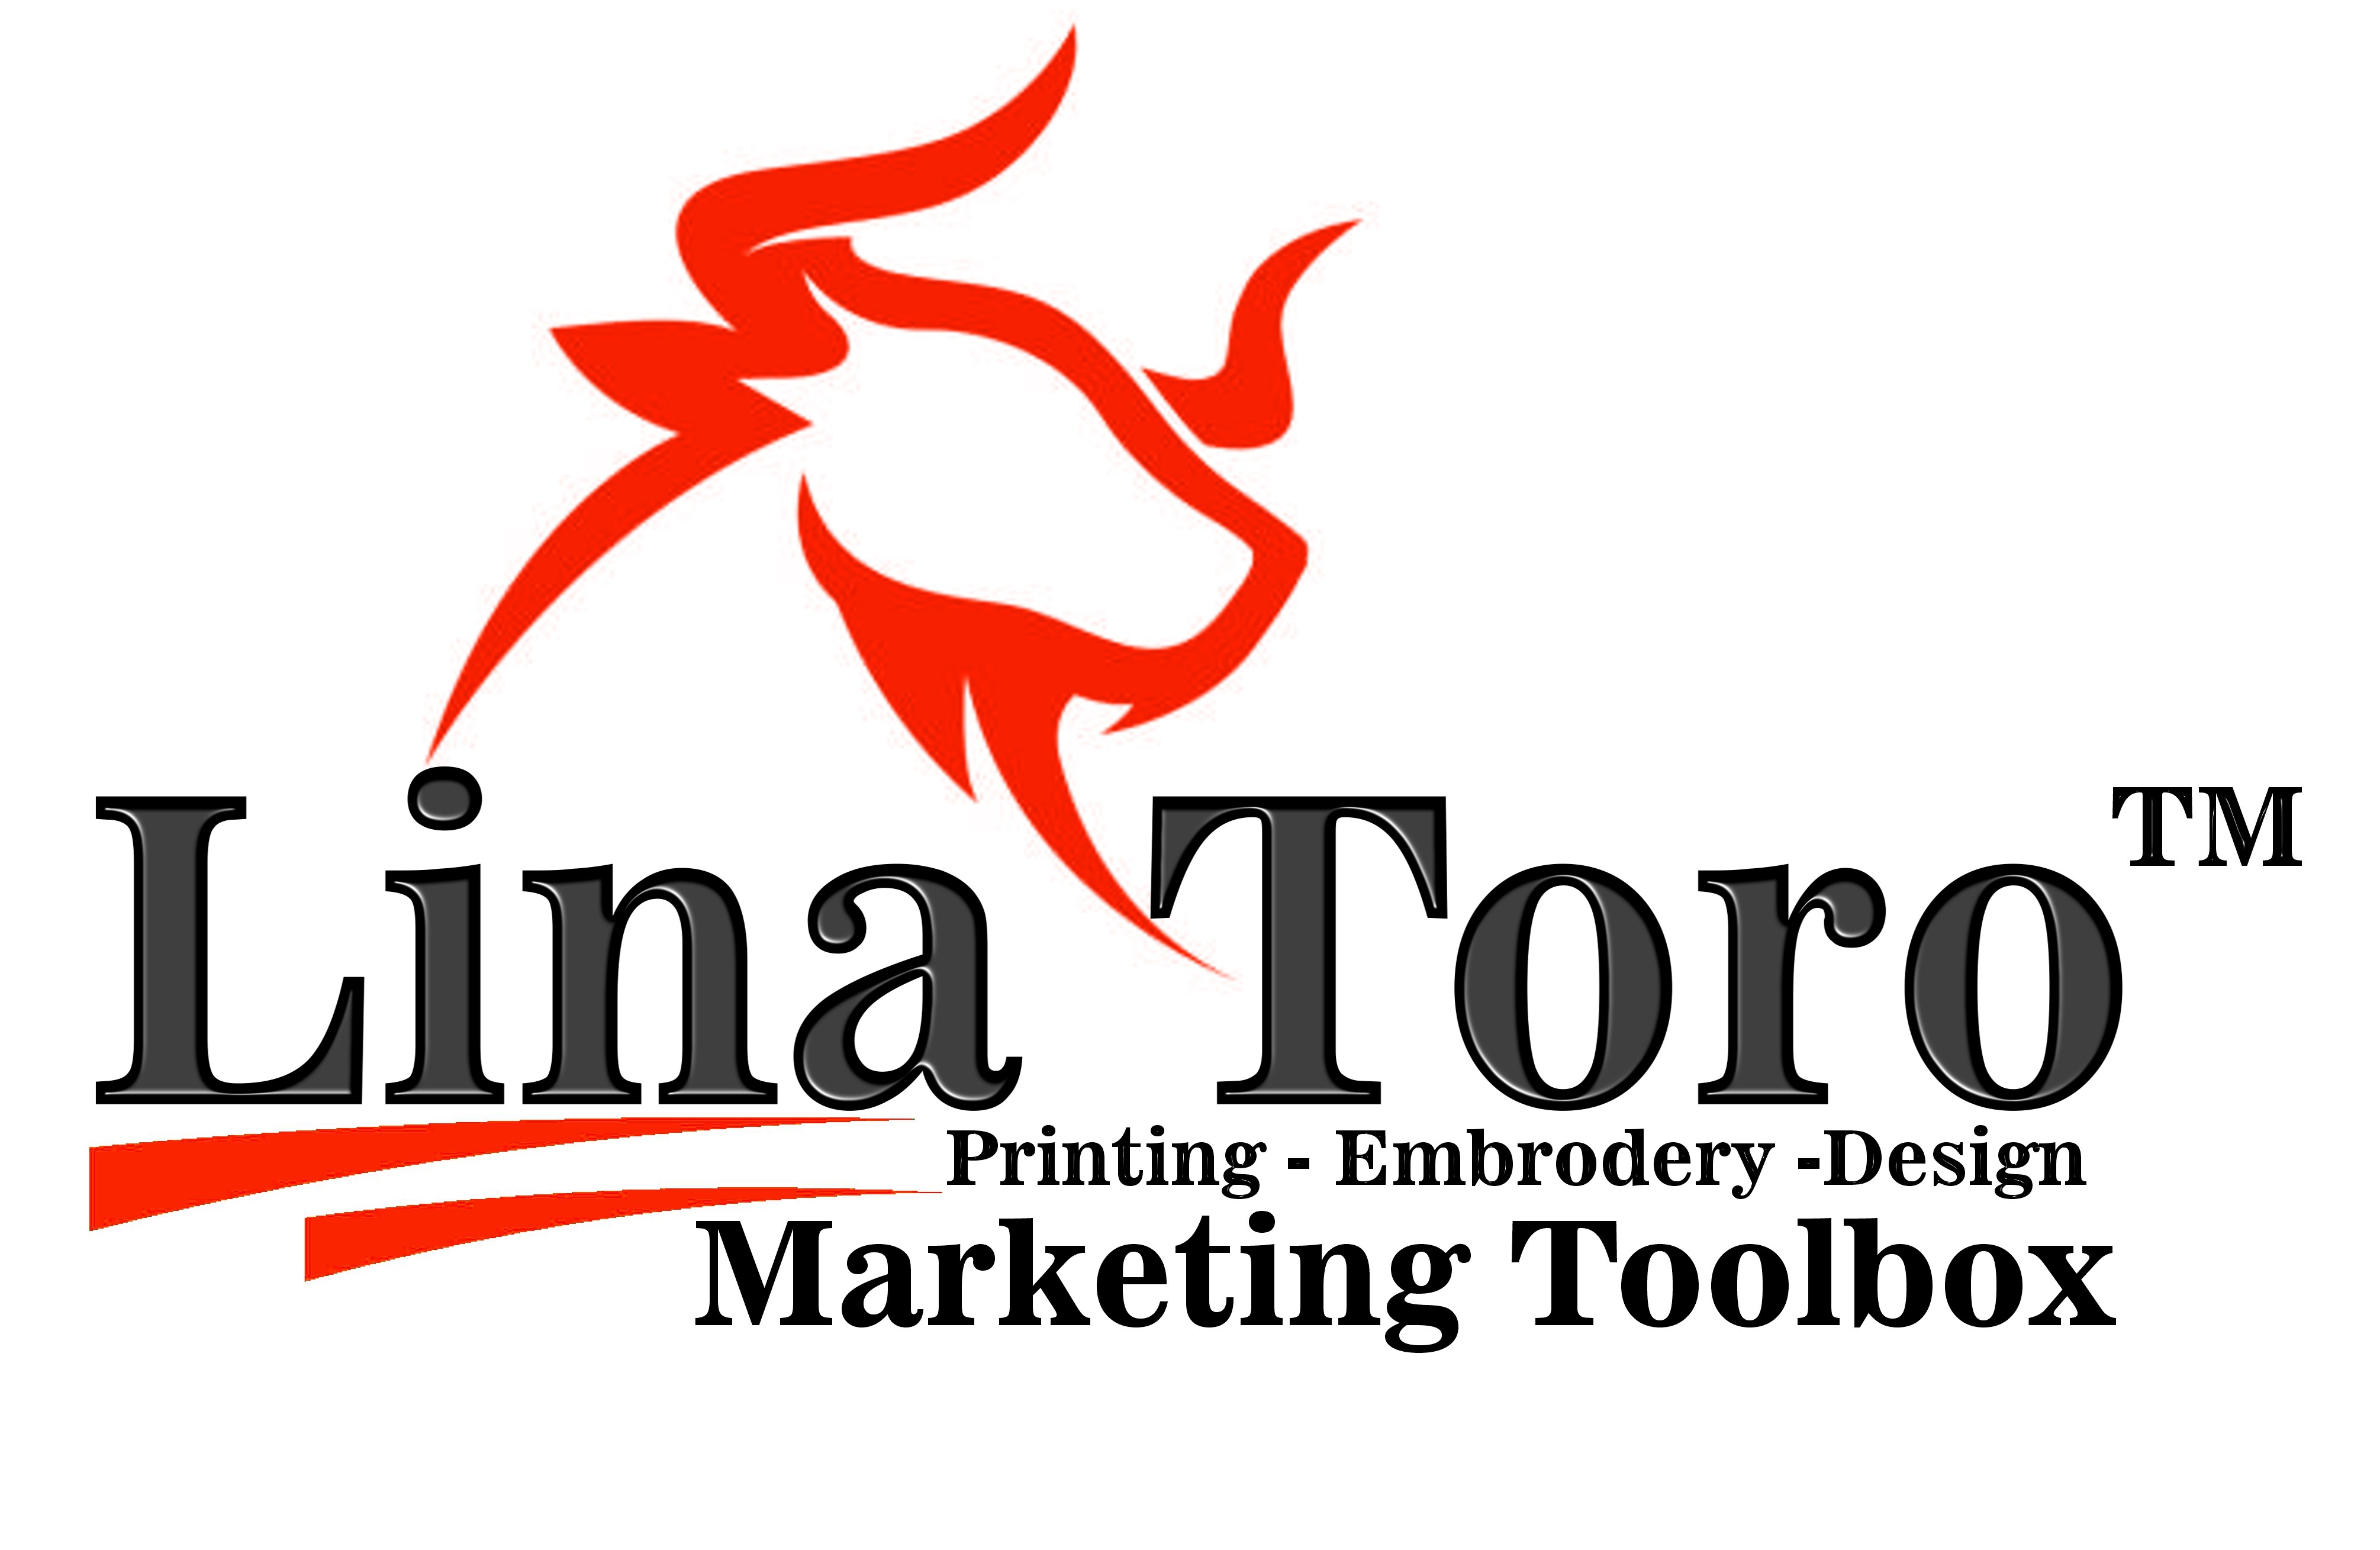 Marketing toolbox Linatoro.net